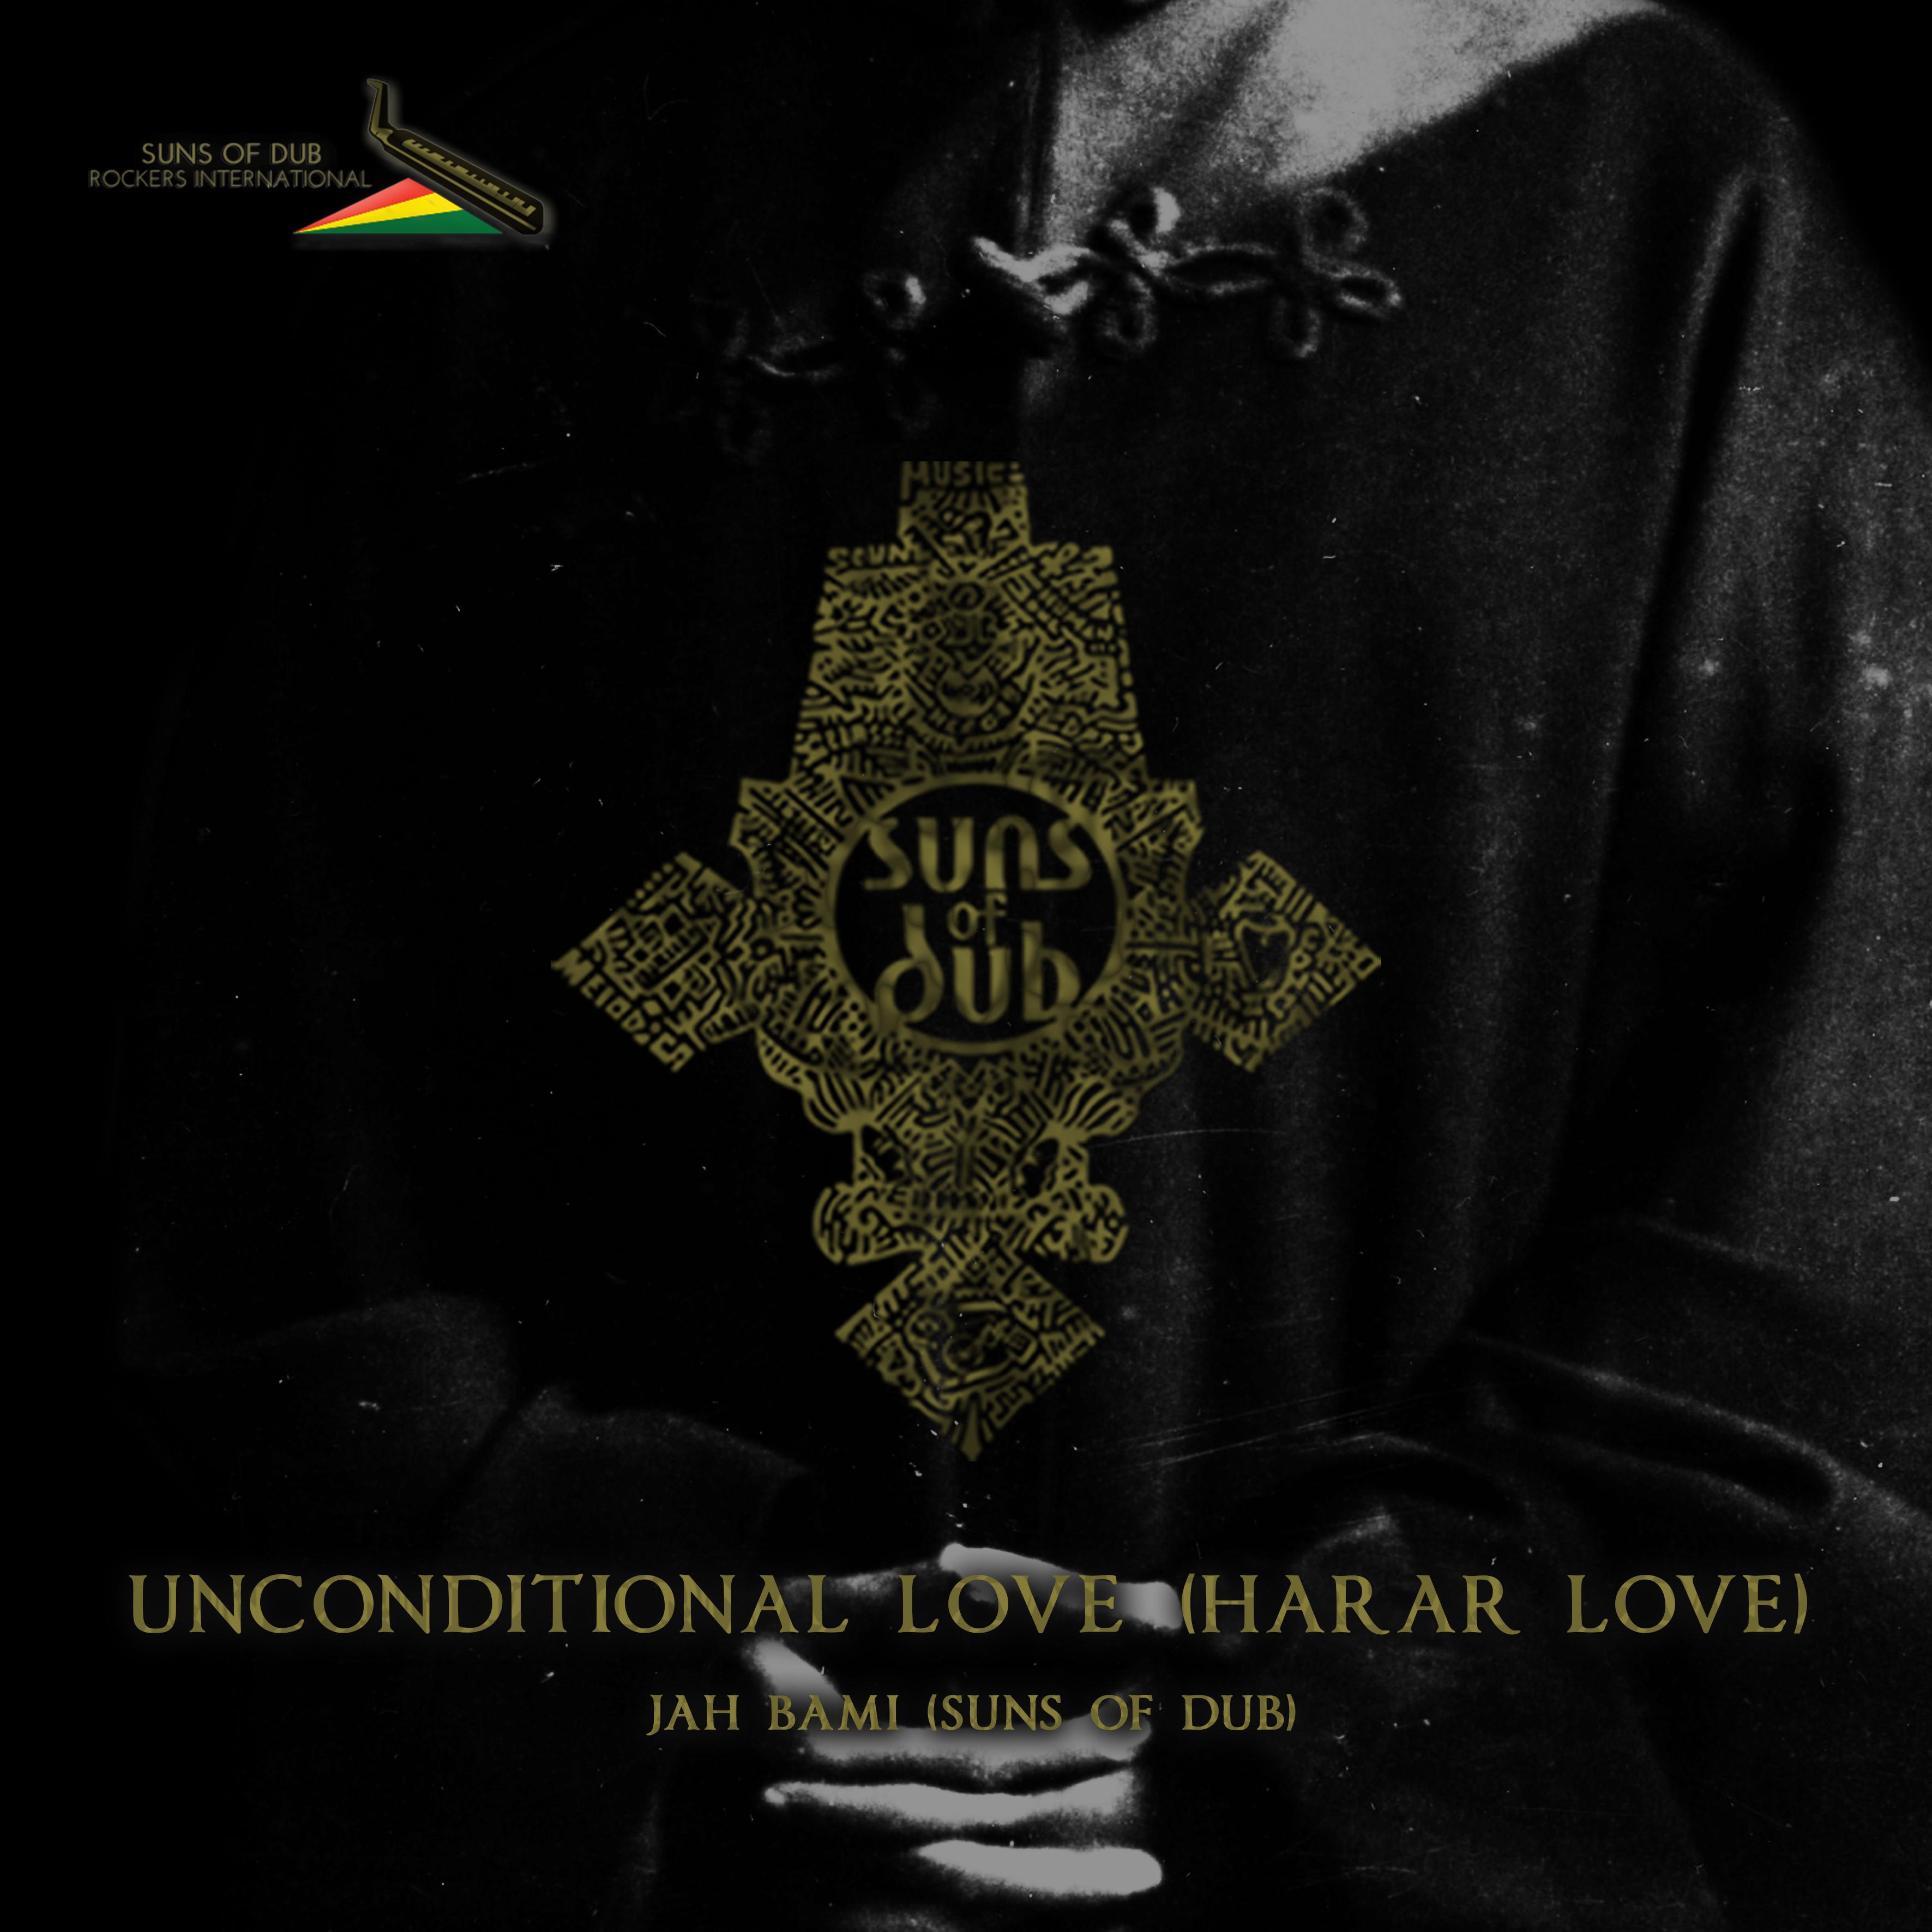 Unconditional Love (Harrar Love) [feat. Jah Bami]